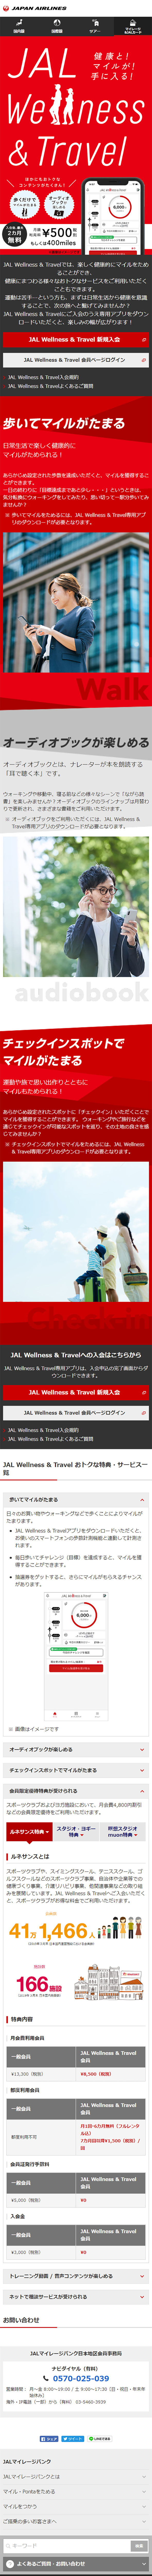 JAL Wellness & Travel_sp_1